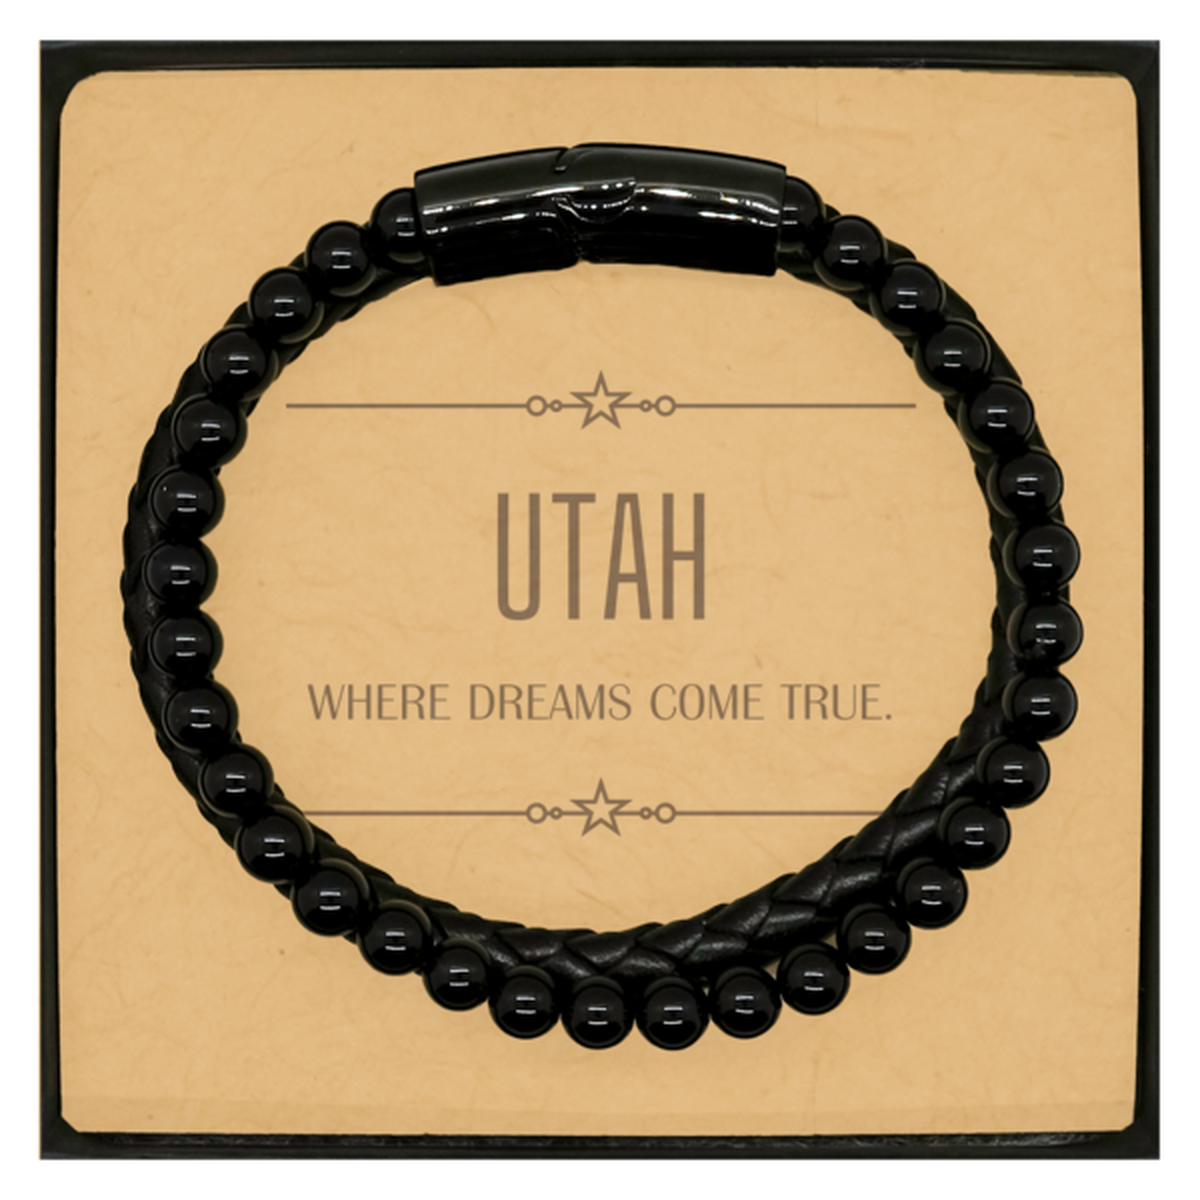 Love Utah State Stone Leather Bracelets, Utah Where dreams come true, Birthday Christmas Inspirational Gifts For Utah Men, Women, Friends